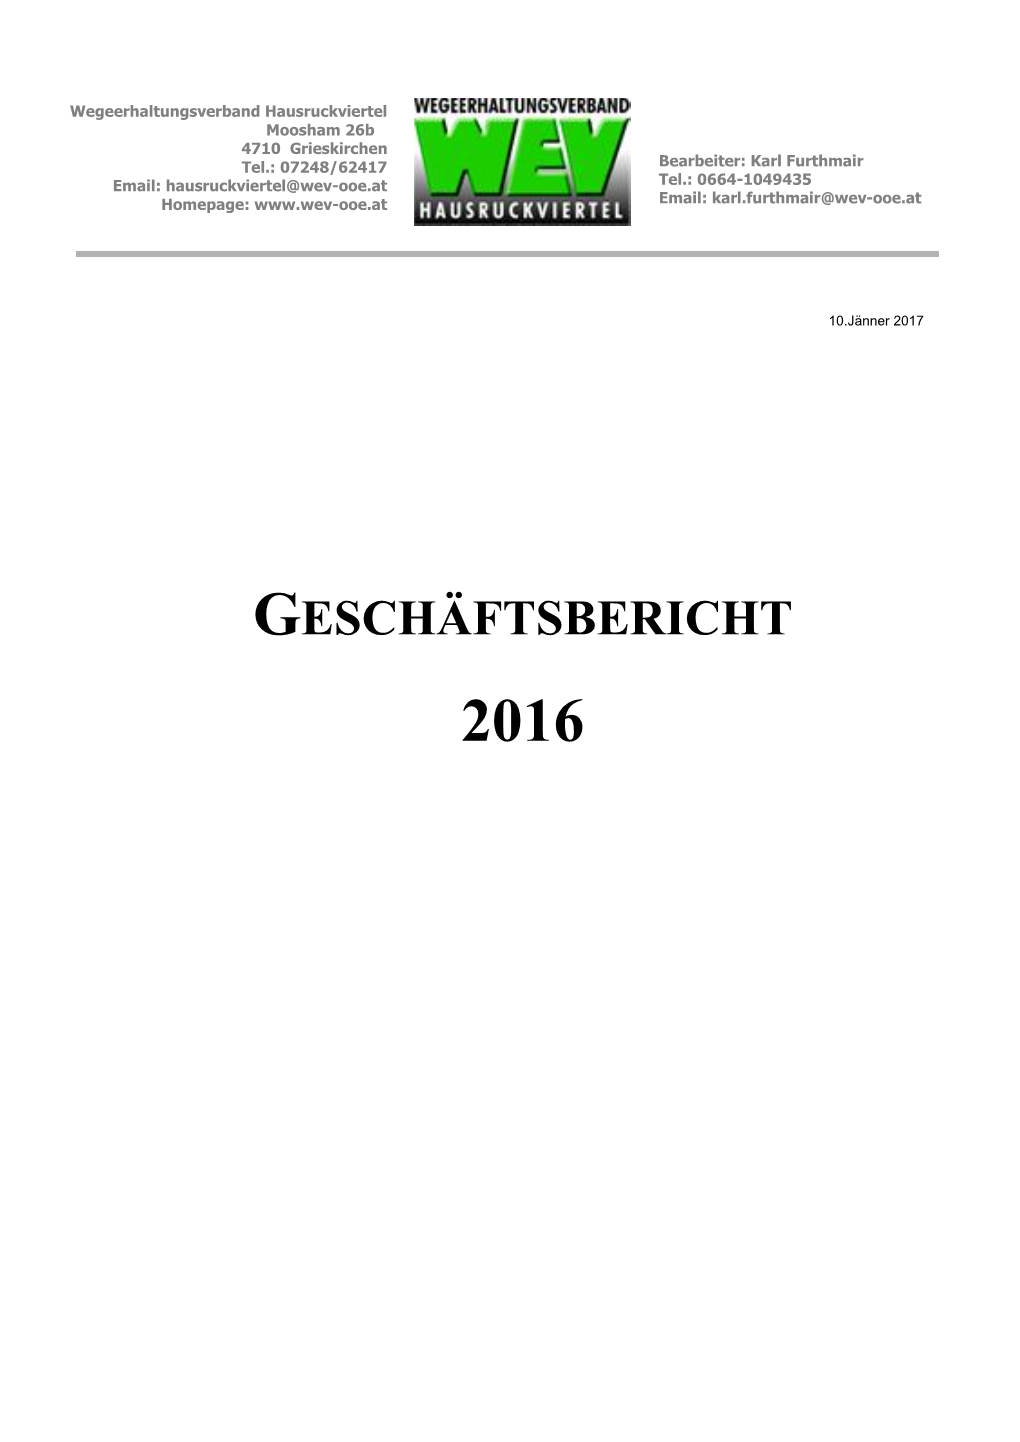 Geschäftsbericht 2016 Wev – Hausruckviertel Geschäftsbericht 2016